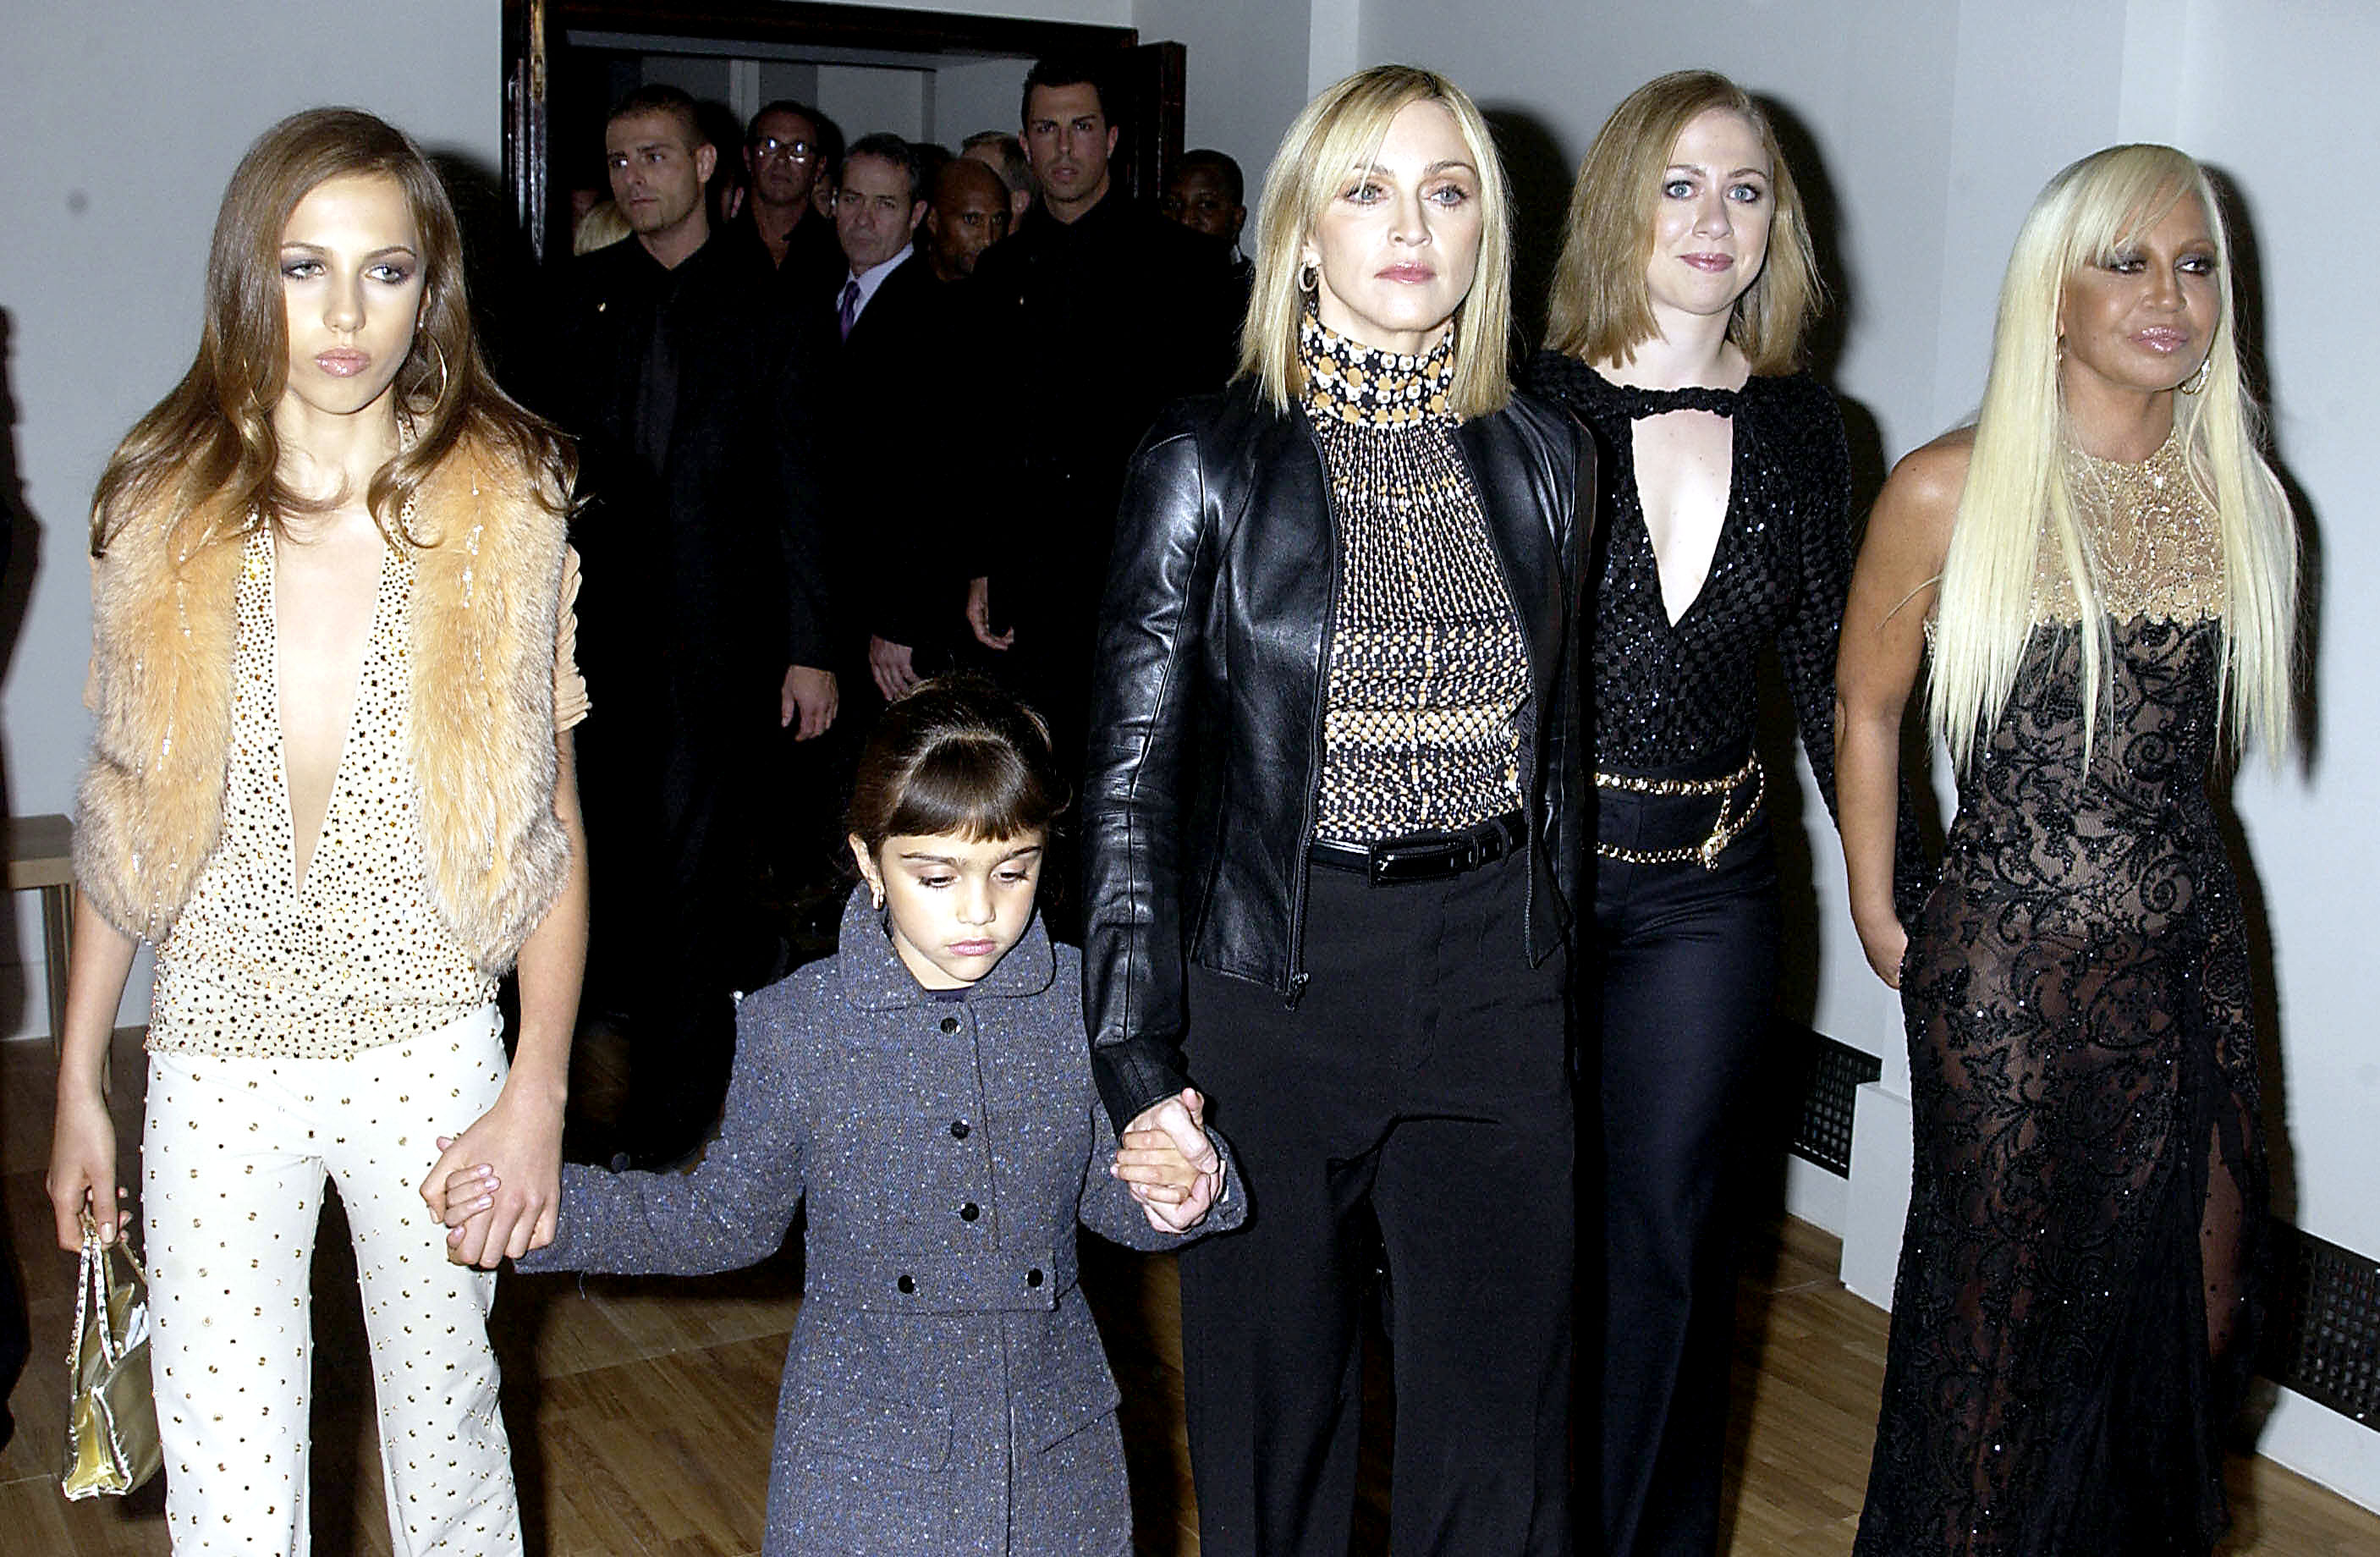 Donatella Versace, daughter Allegra Versace, Madonna, daughter Lourdes Leon, Chelsea Clinton